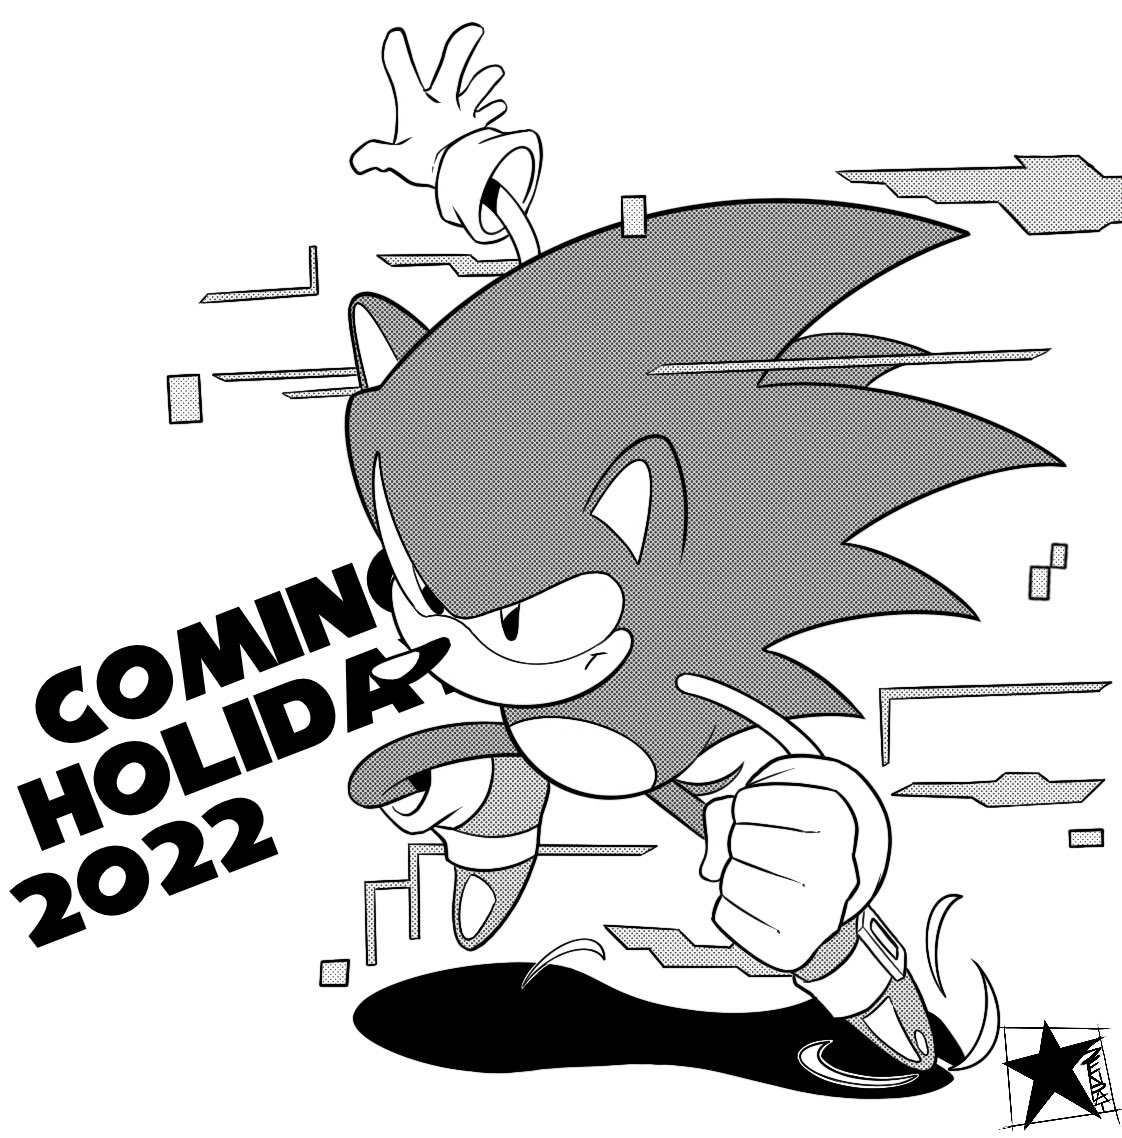 Hopefully still coming soon

#SonicTheHedgehog 
#Sonic https://t.co/NvcRVhwFov 